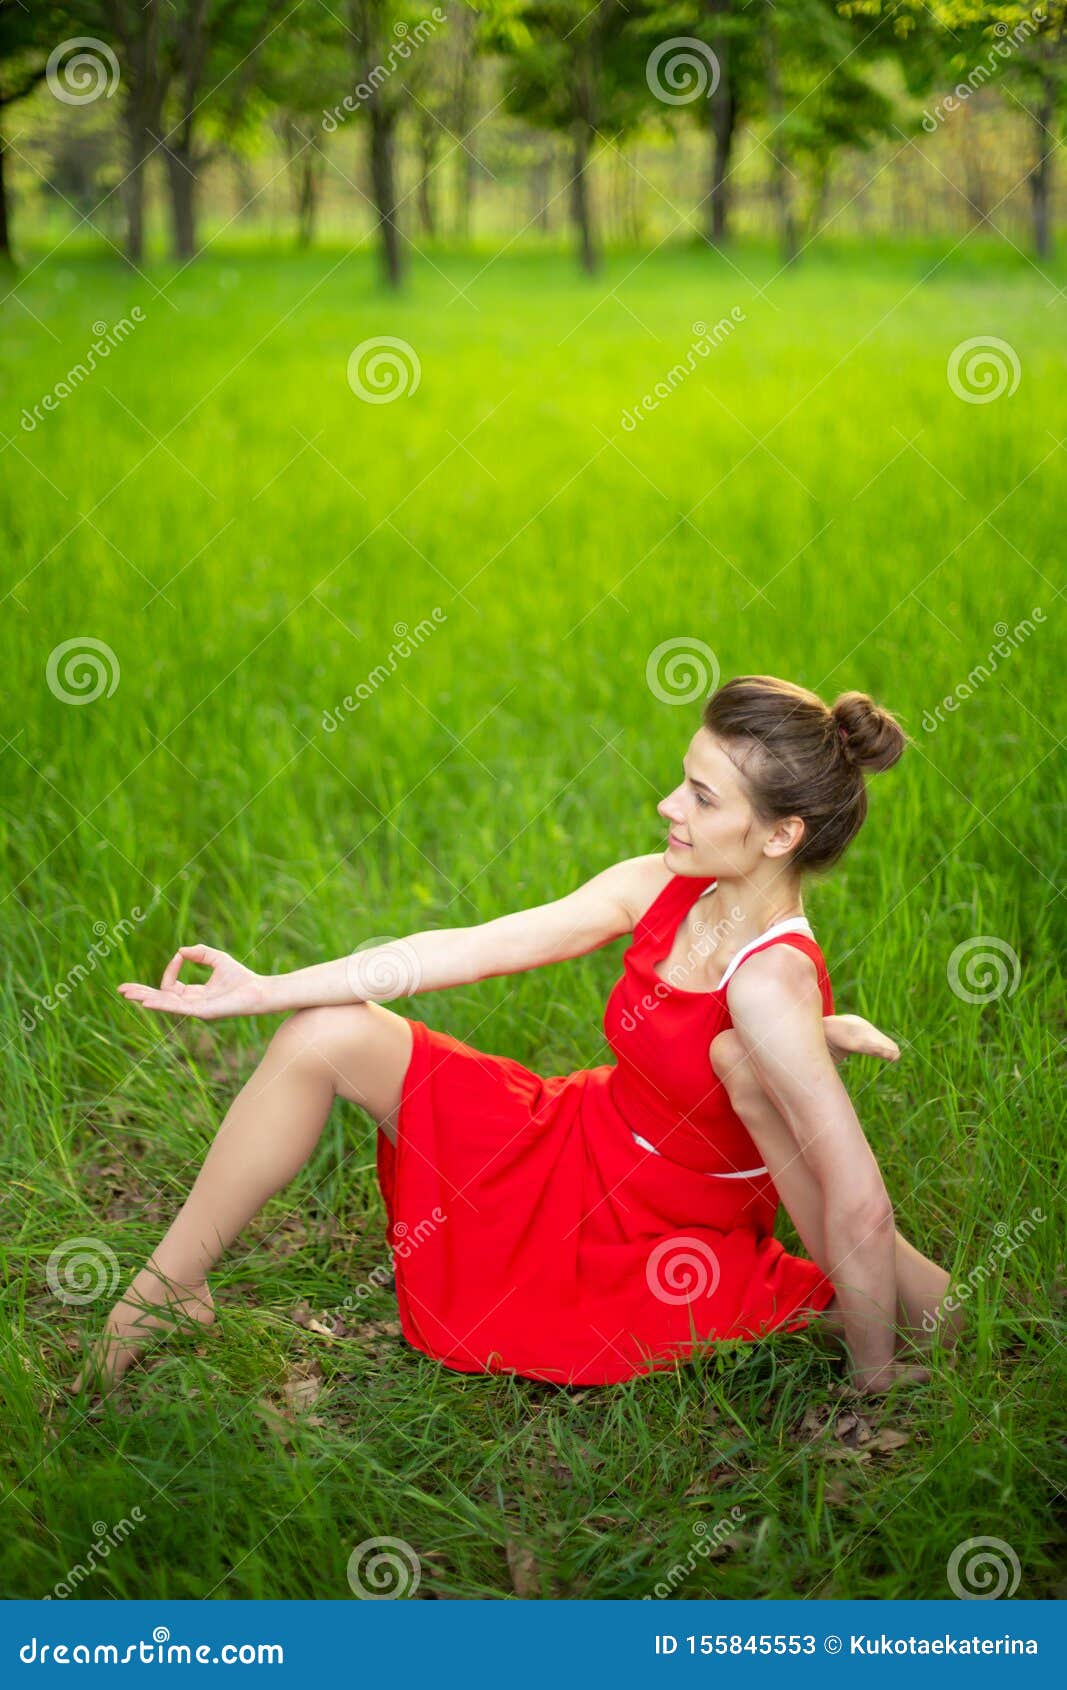 yoga in a dress